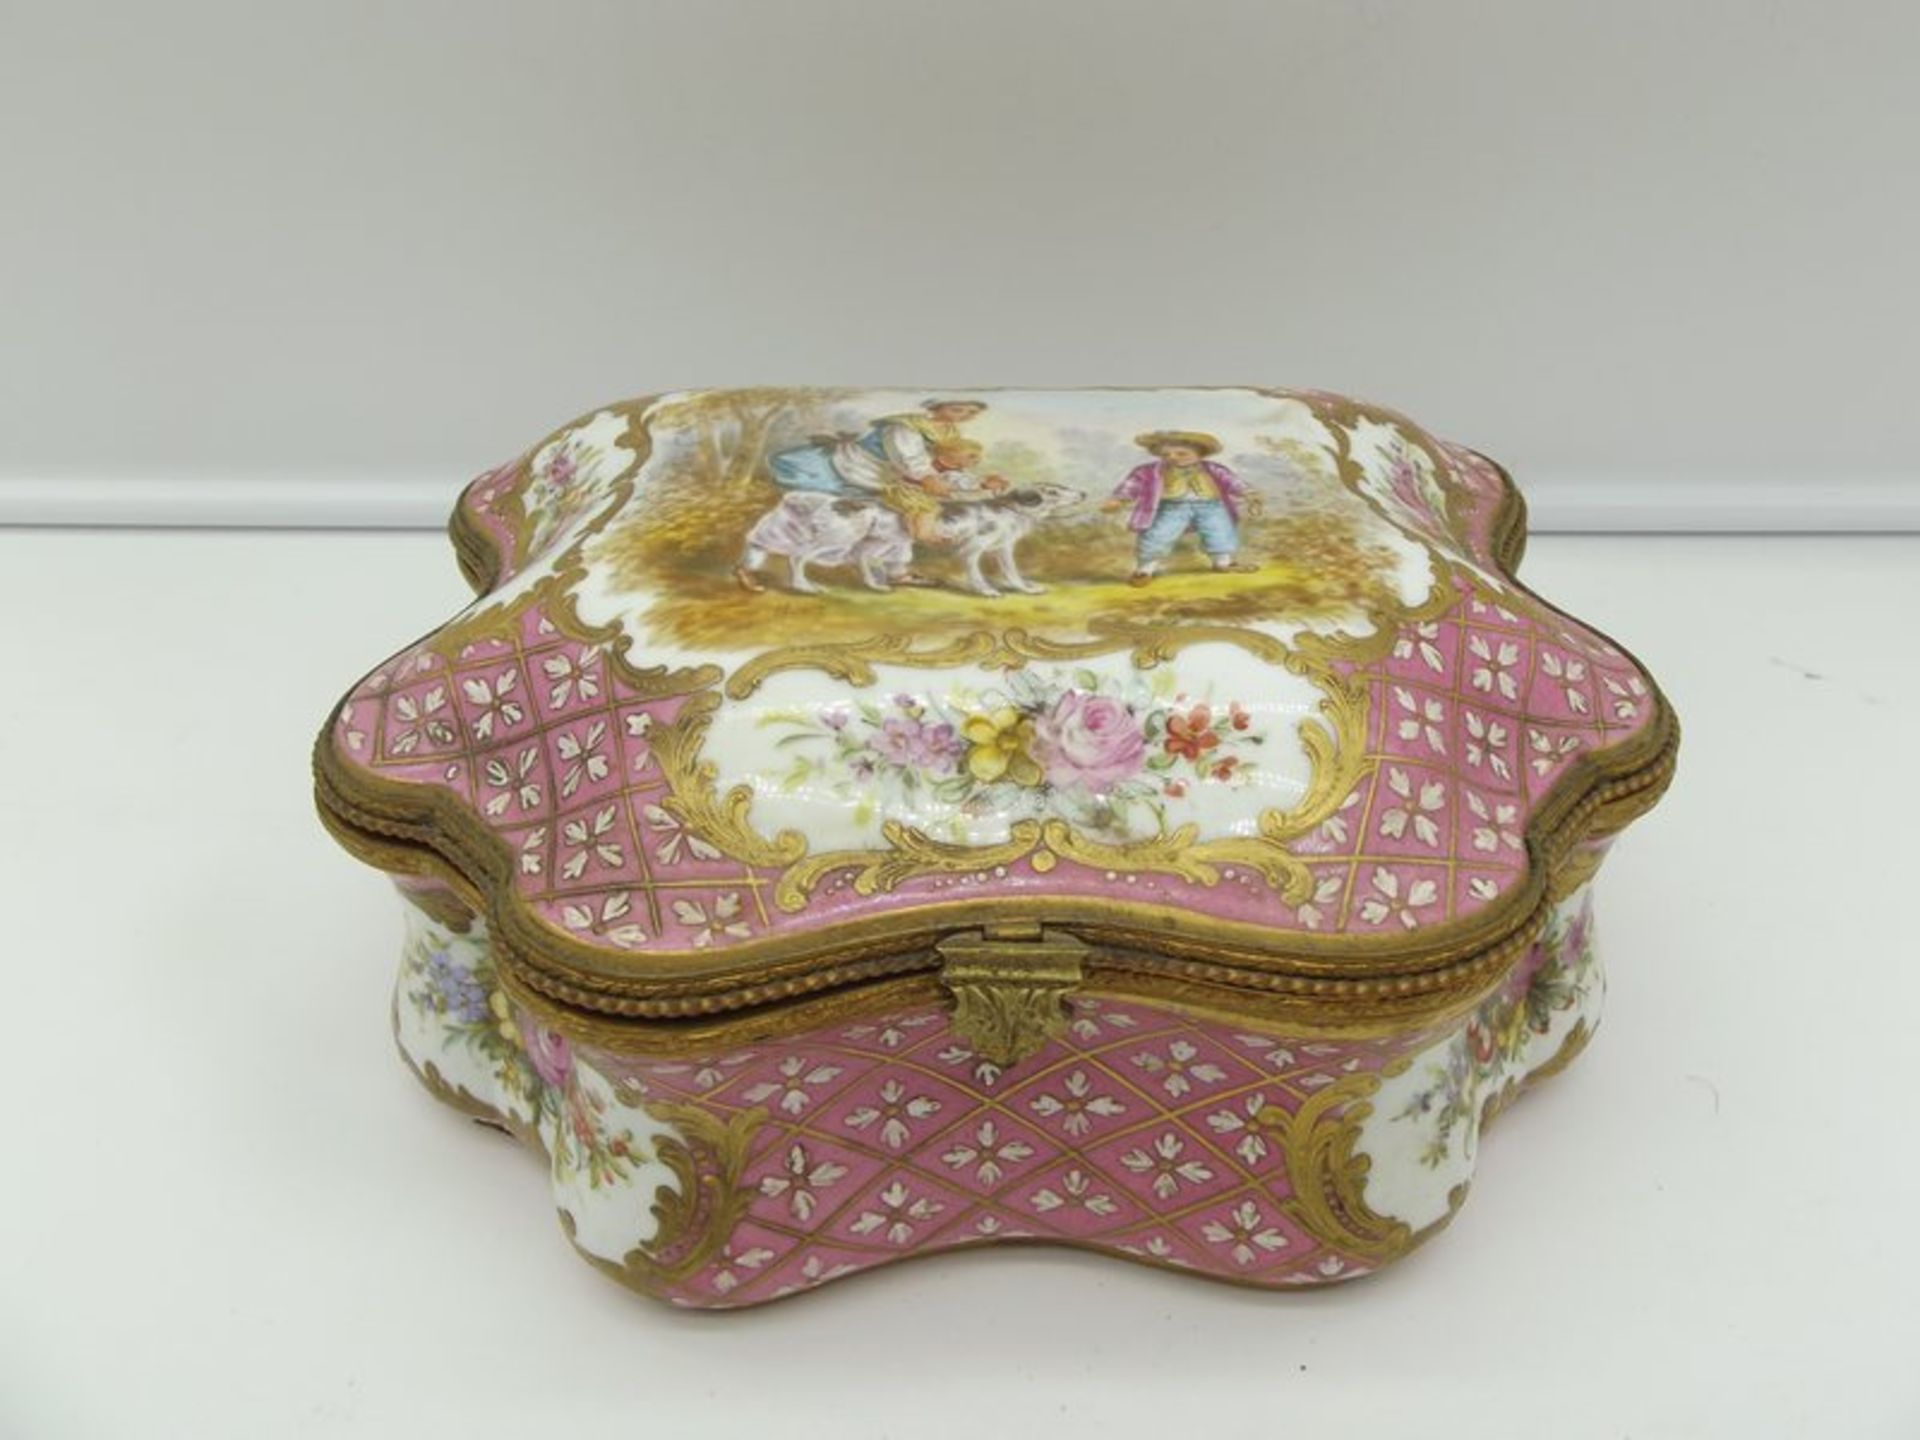 19th century Sevres porcelain box